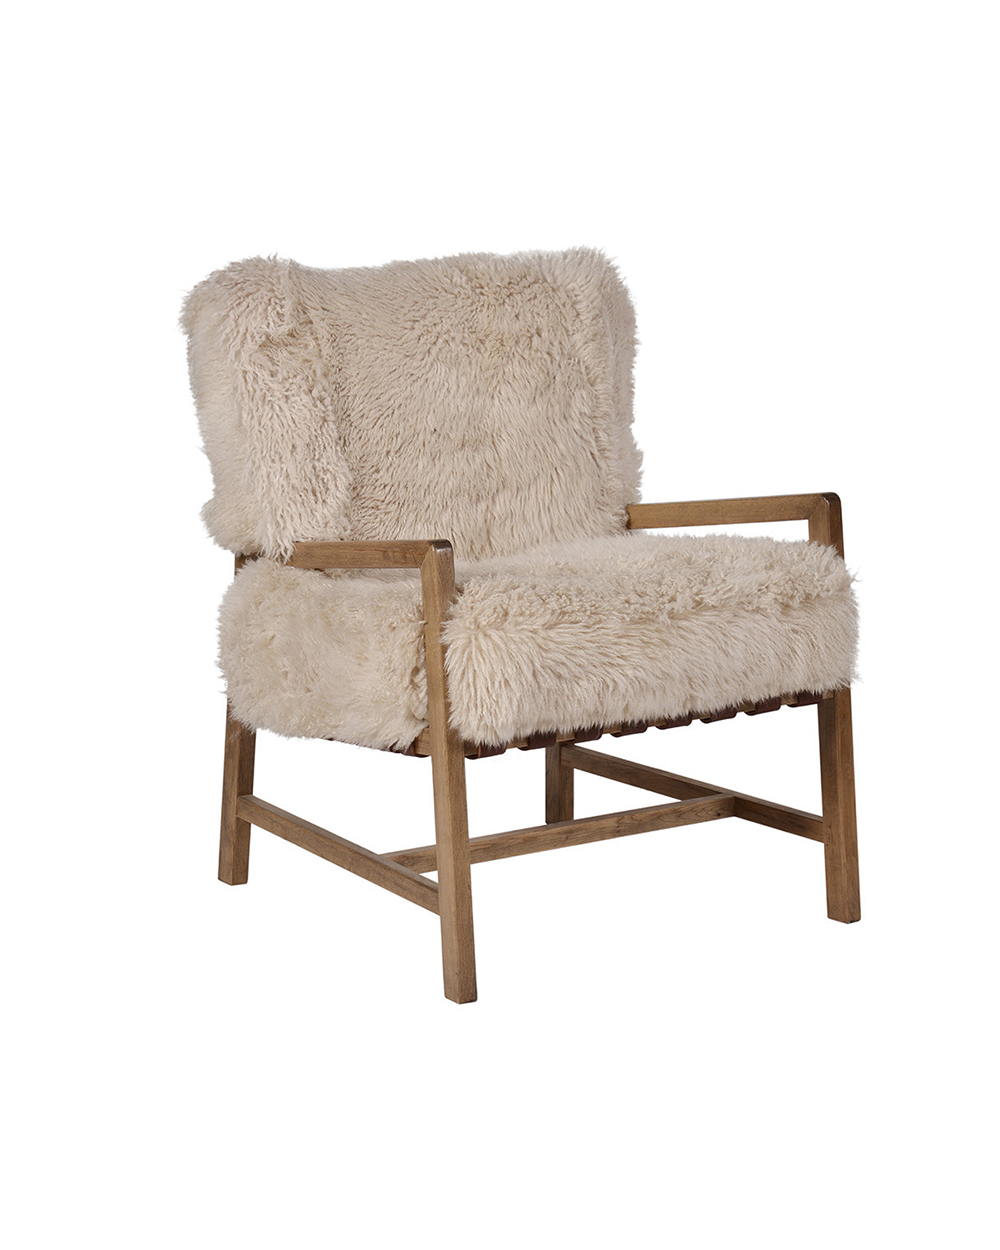 Yeti Chair by Timothy Oulton